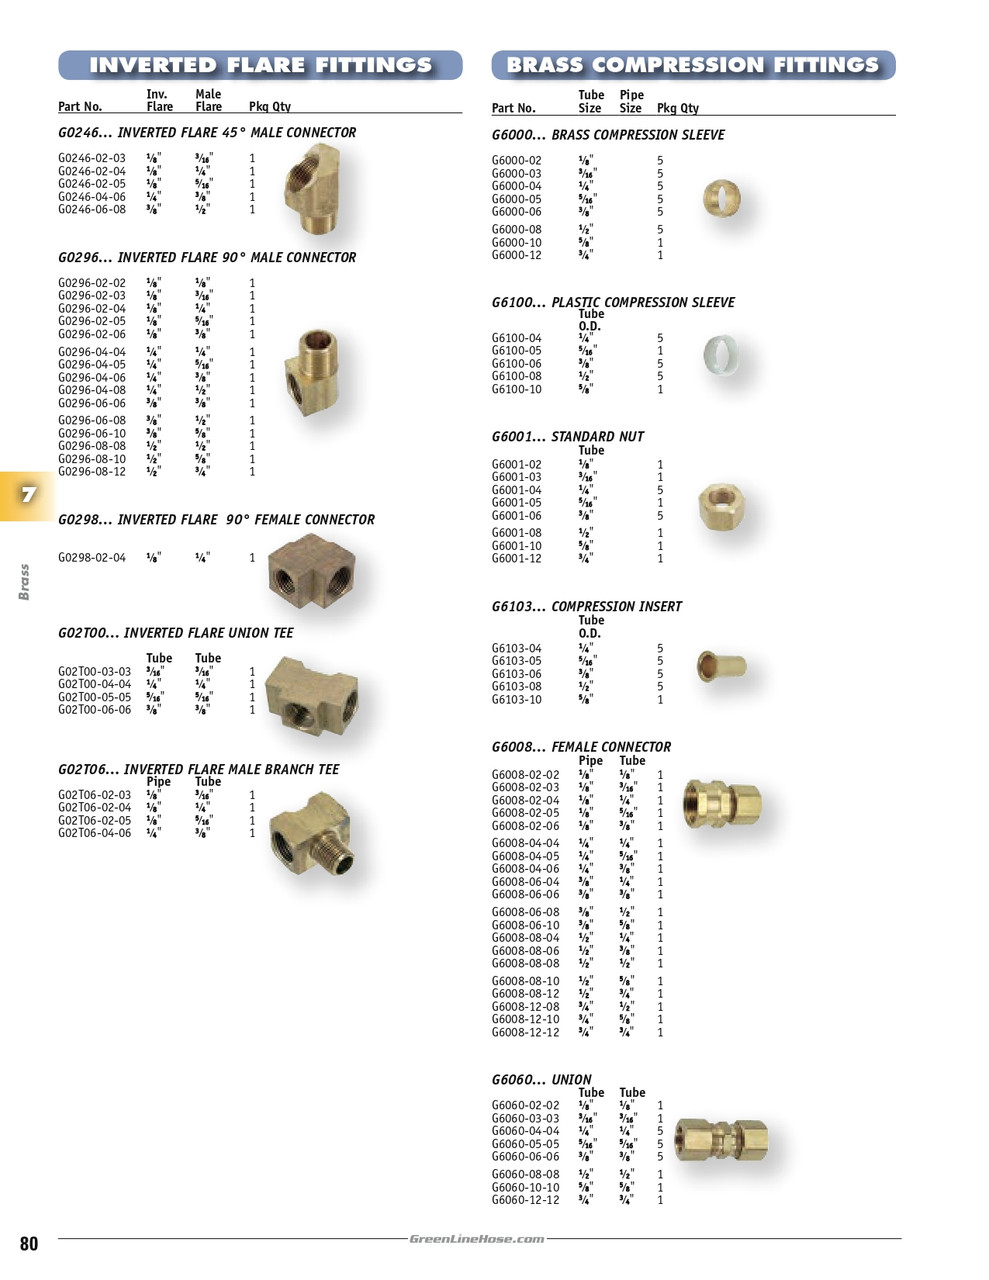 1/4" Brass Plastic Tube Compression Support Insert   G6103-04